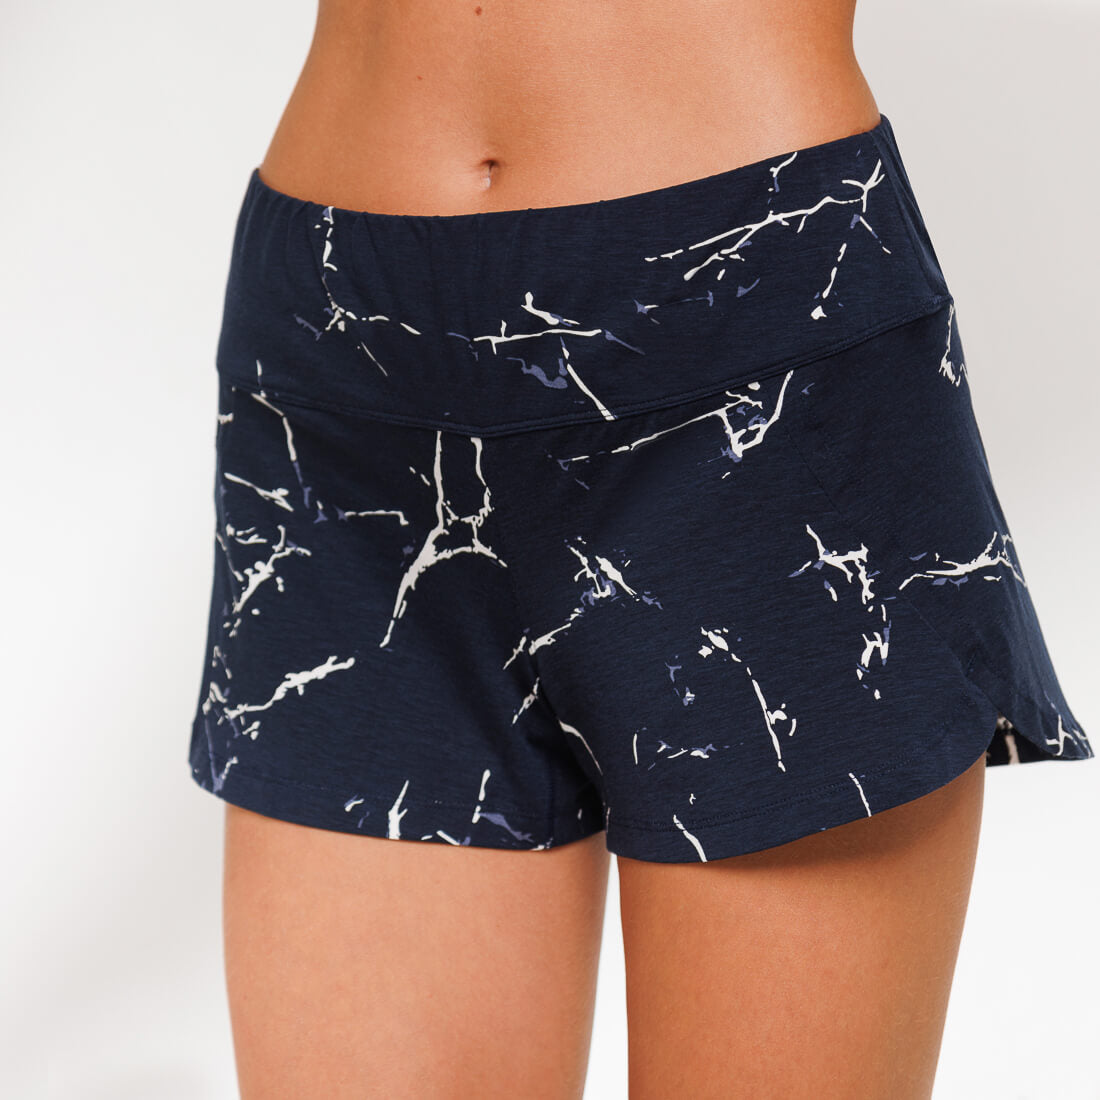 Women's cooling pajamas shorts || Blue marble